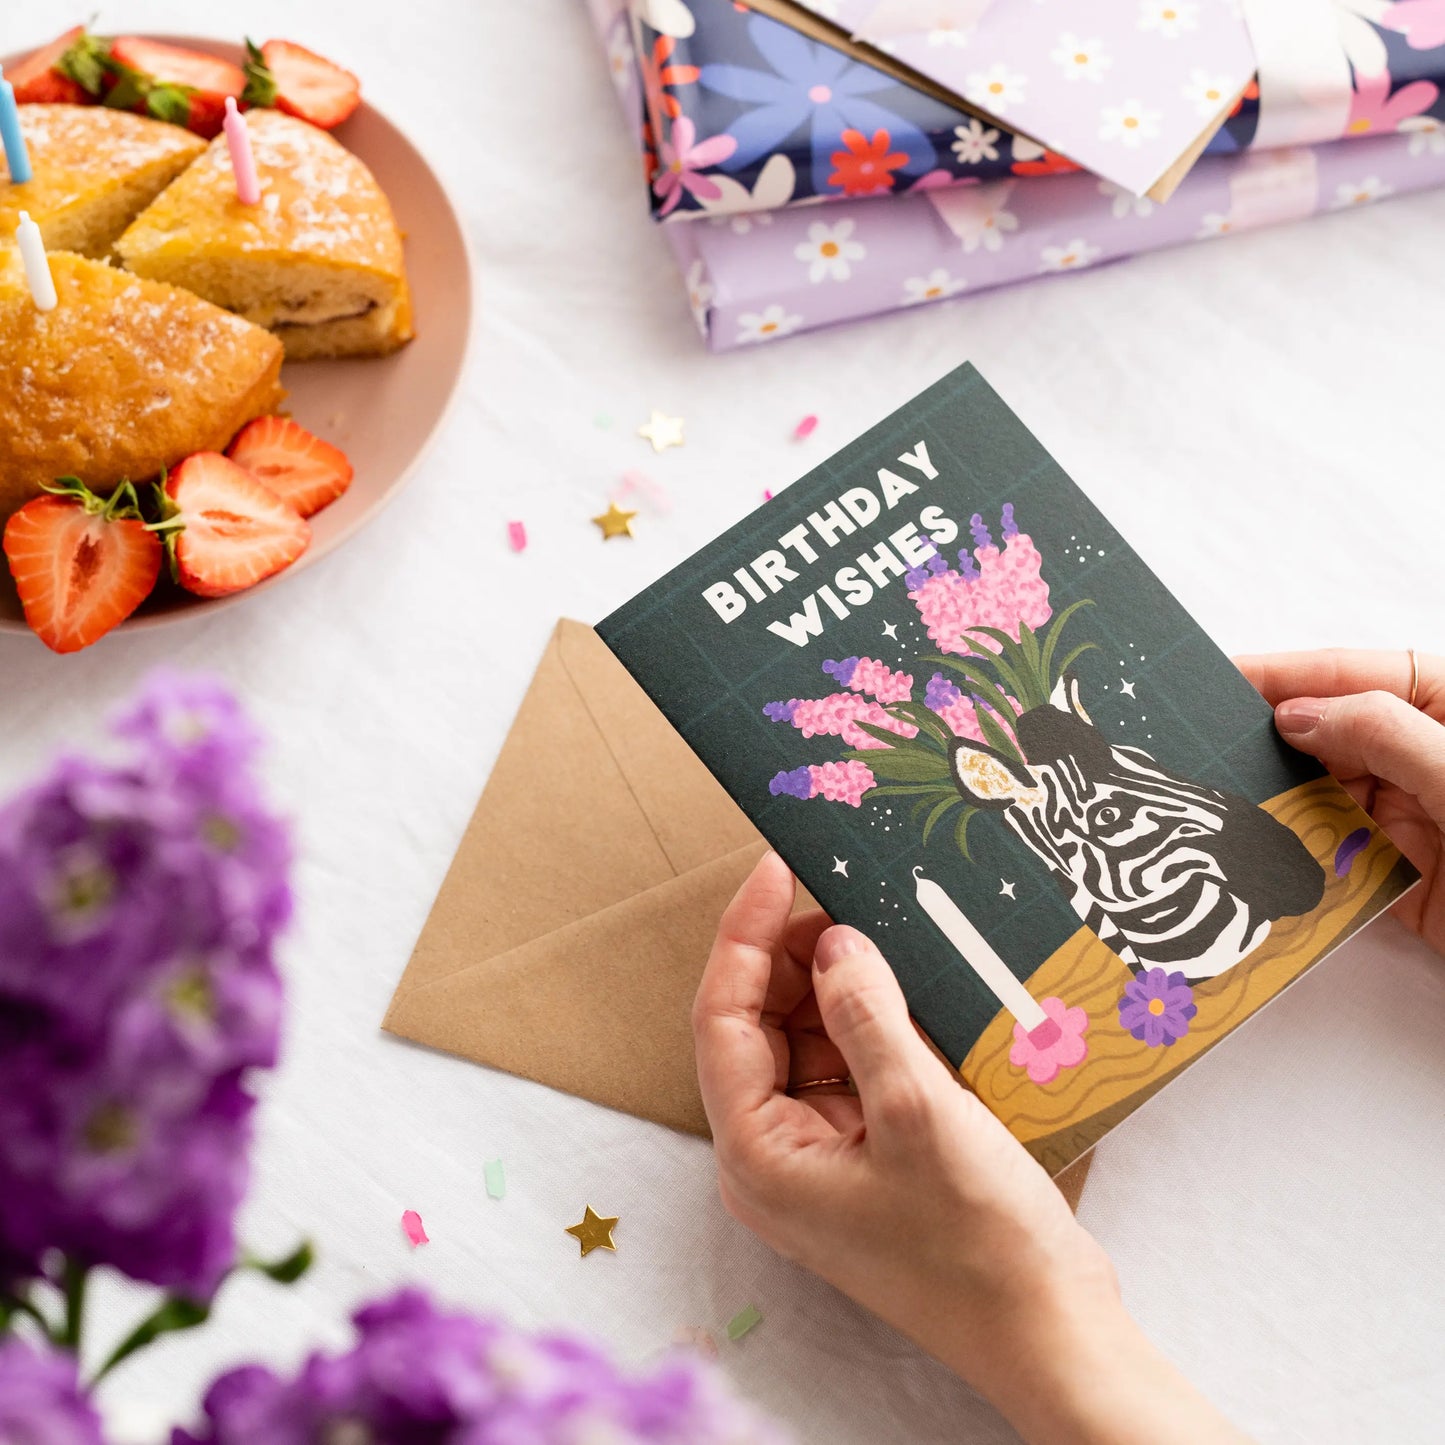 Zebra Vase Birthday Card | Animal Birthday Card | Zebra Card